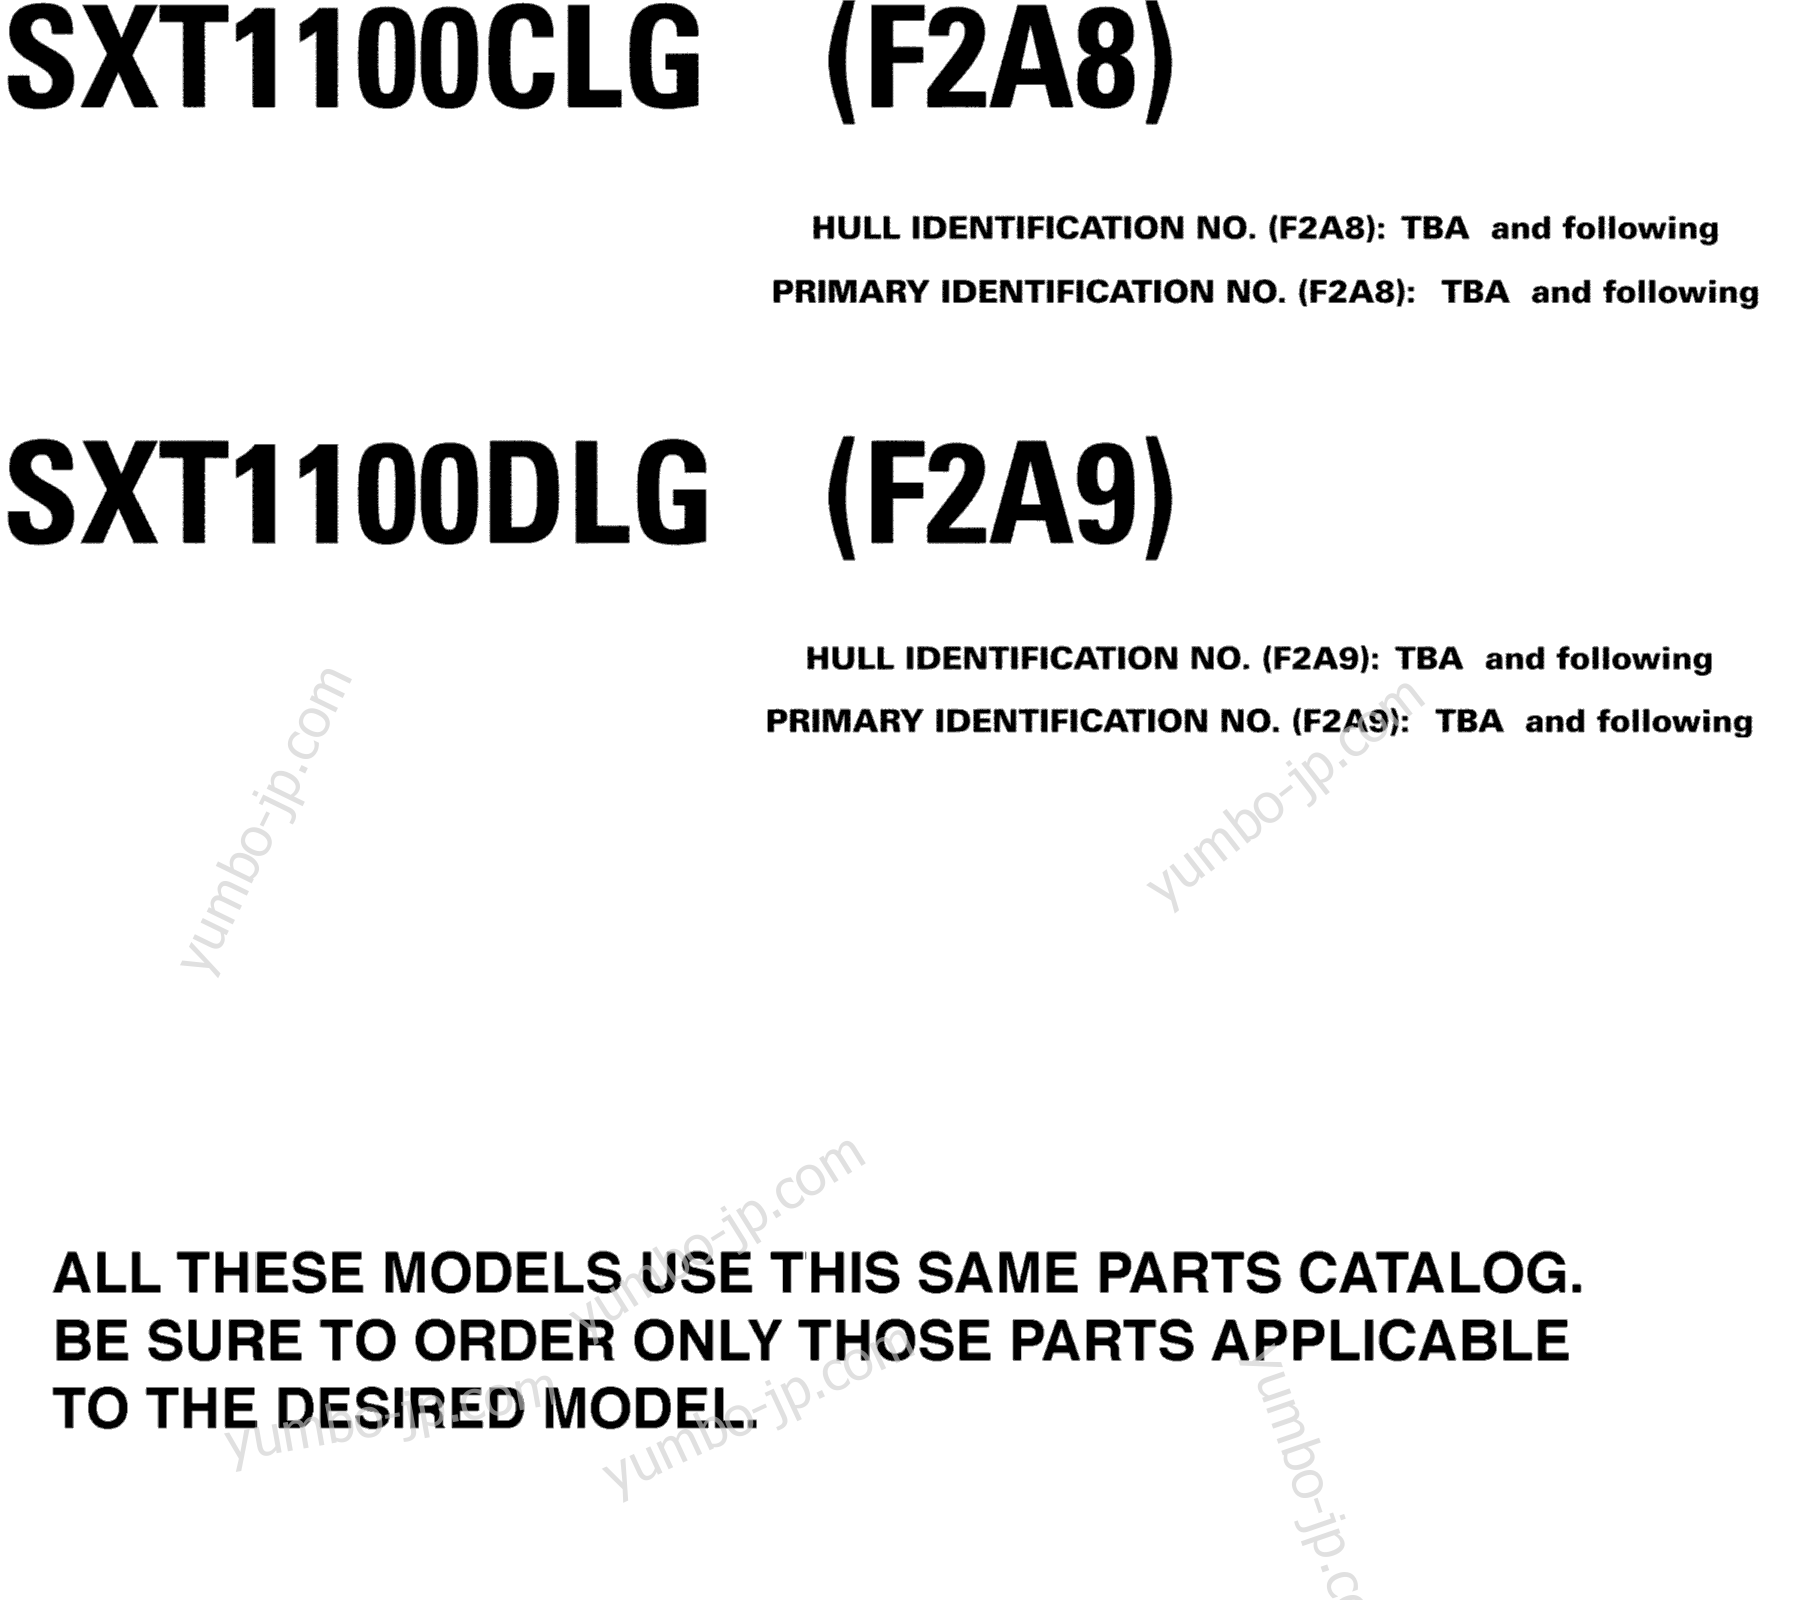 Models In This Catalog для катеров YAMAHA SX230 HO CA & NY (SXT1100DLG) CA 2008 г.